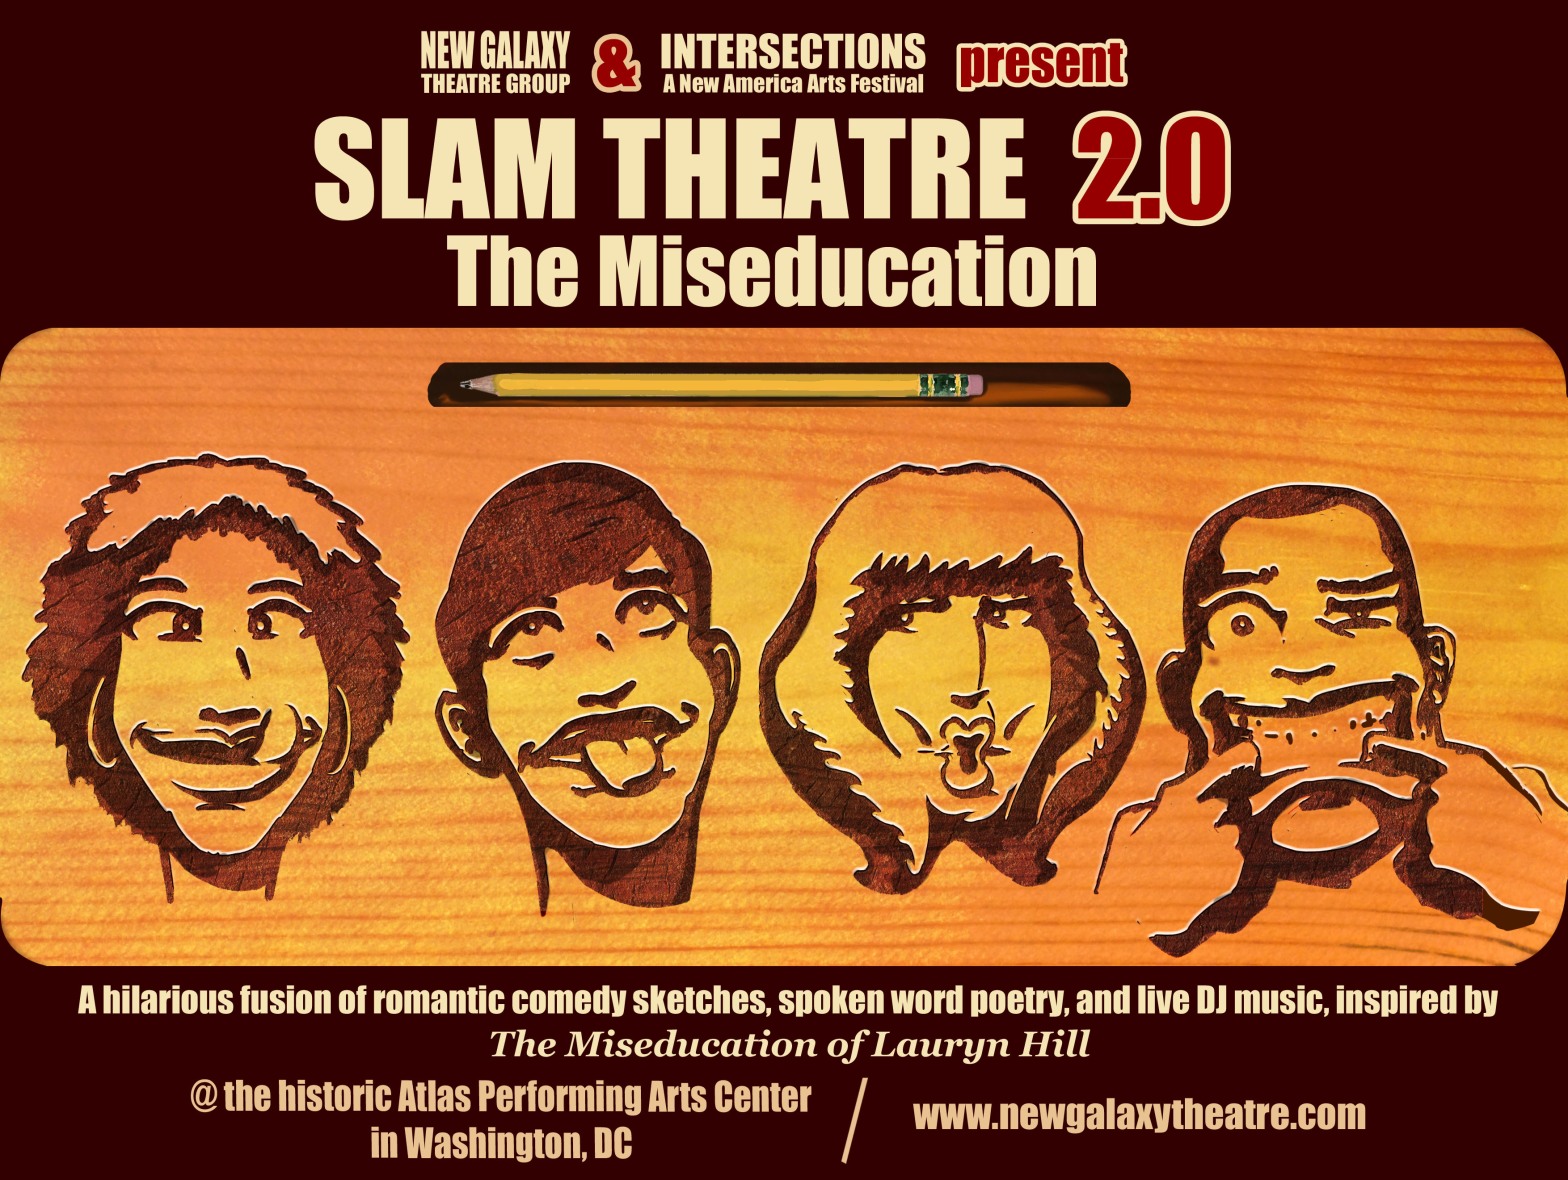 Slam Theatre 2.0 The Miseducation